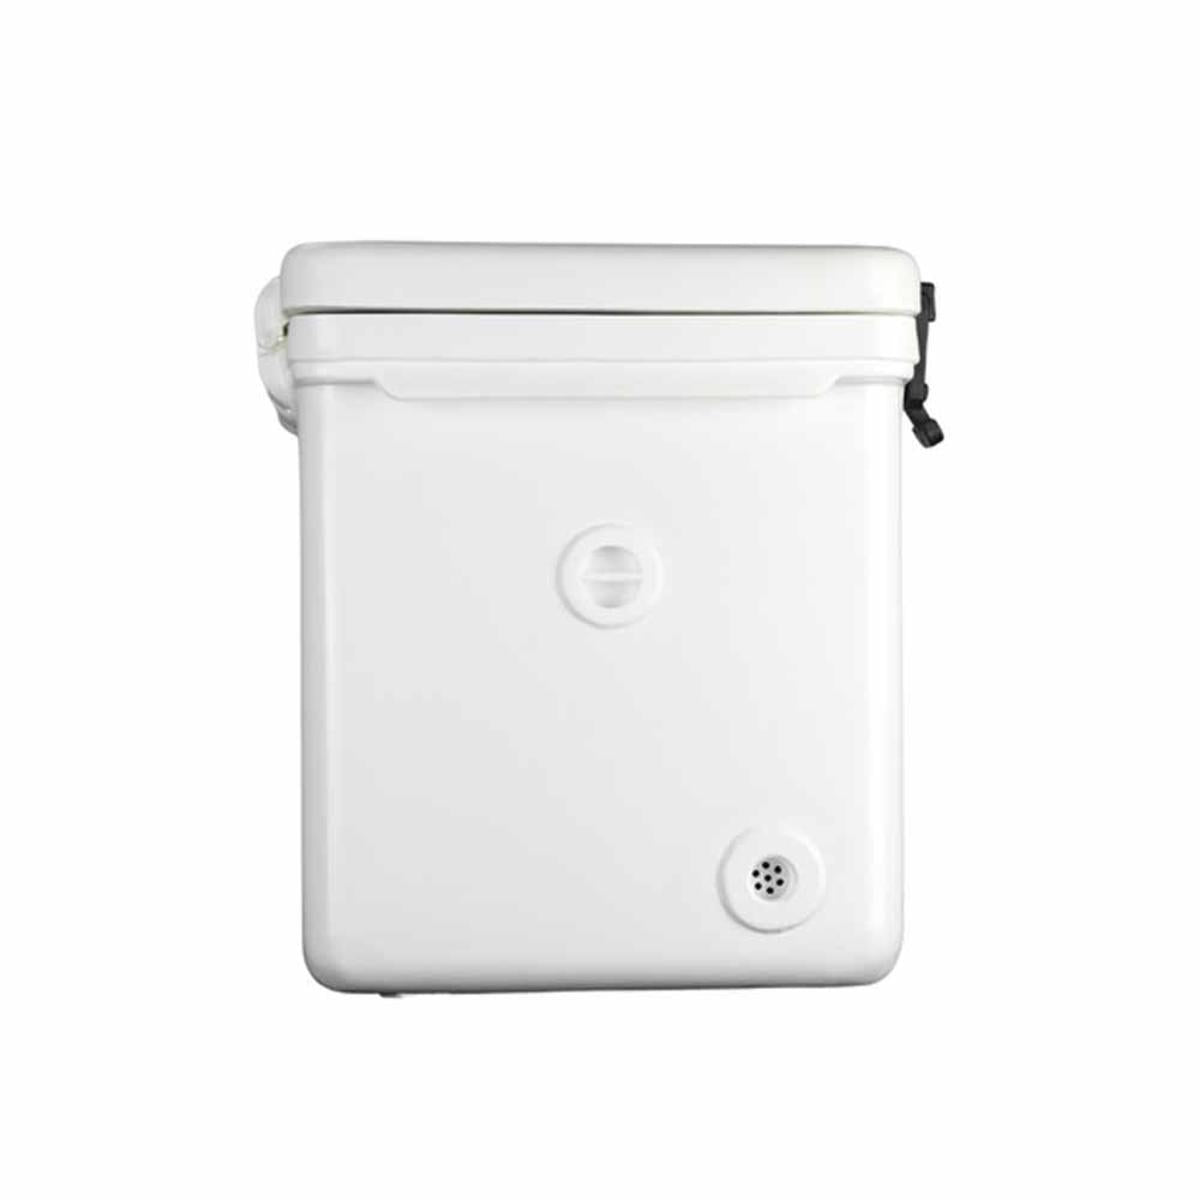 Icey-Tek 80 Quart Rotomold Cooler - White